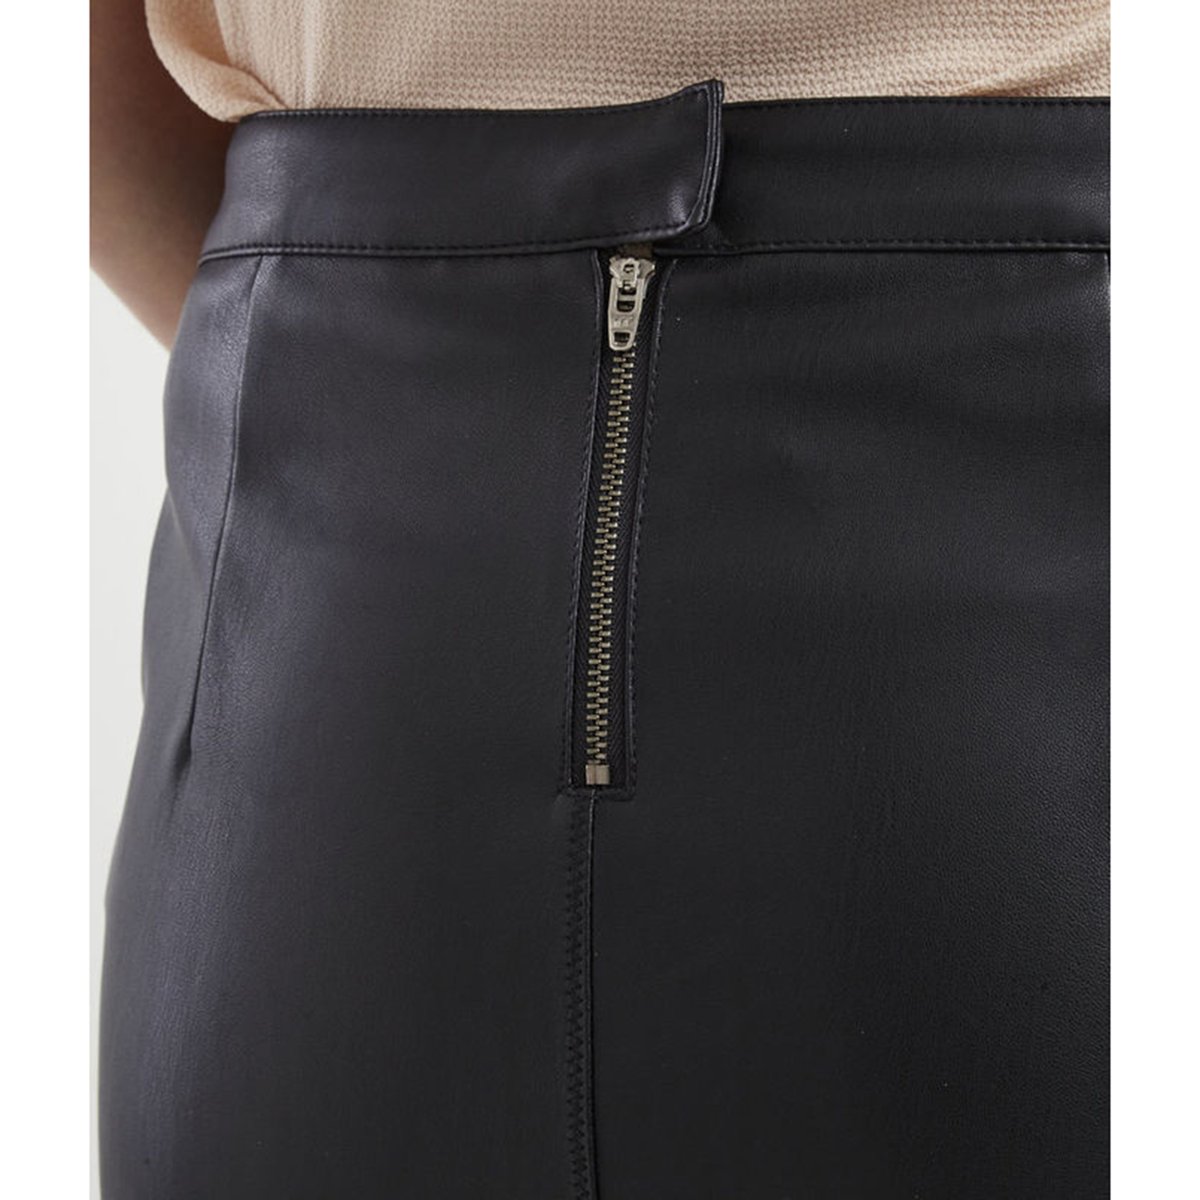 Юбка-карандаш La Redoute С разрезом Vipen Skirt S черный, размер S - фото 5